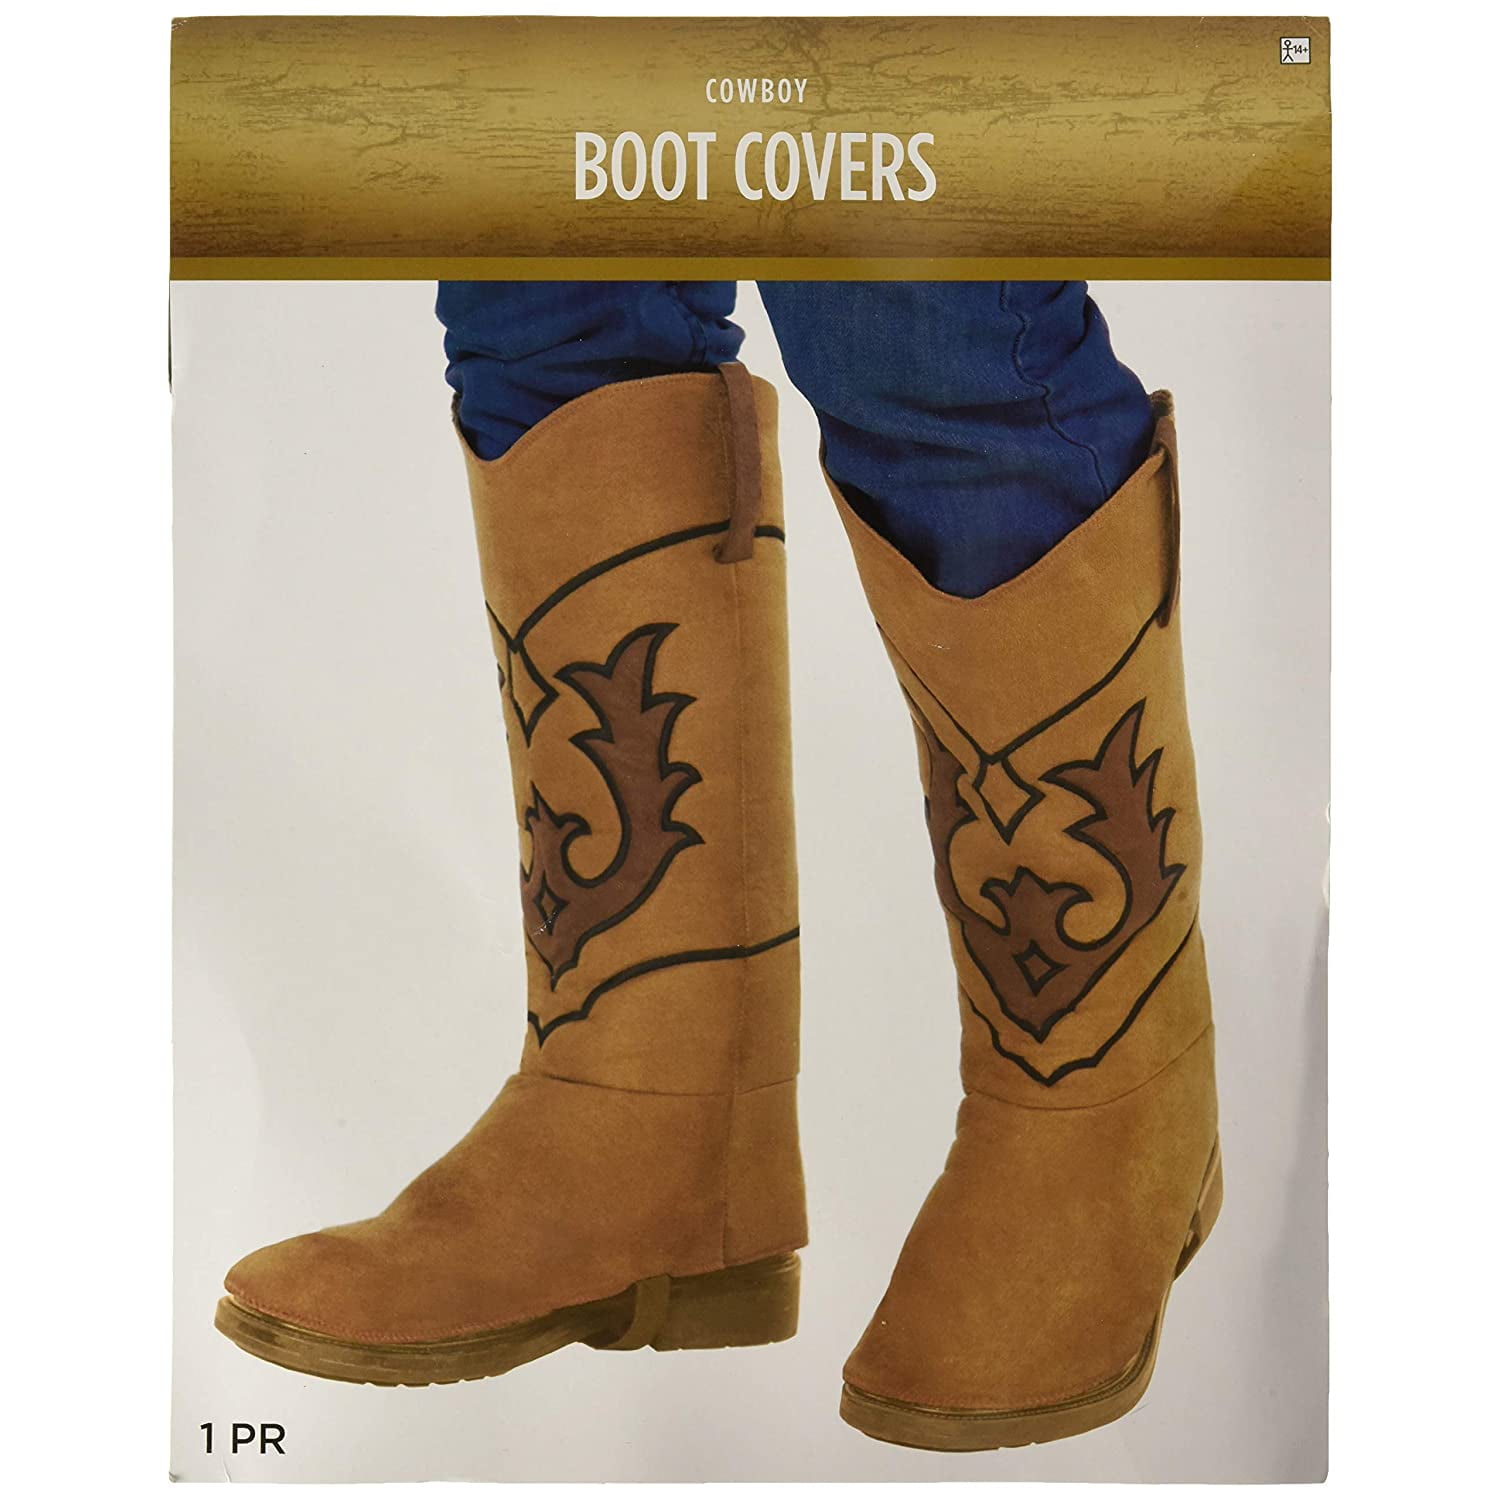 boot covers walmart